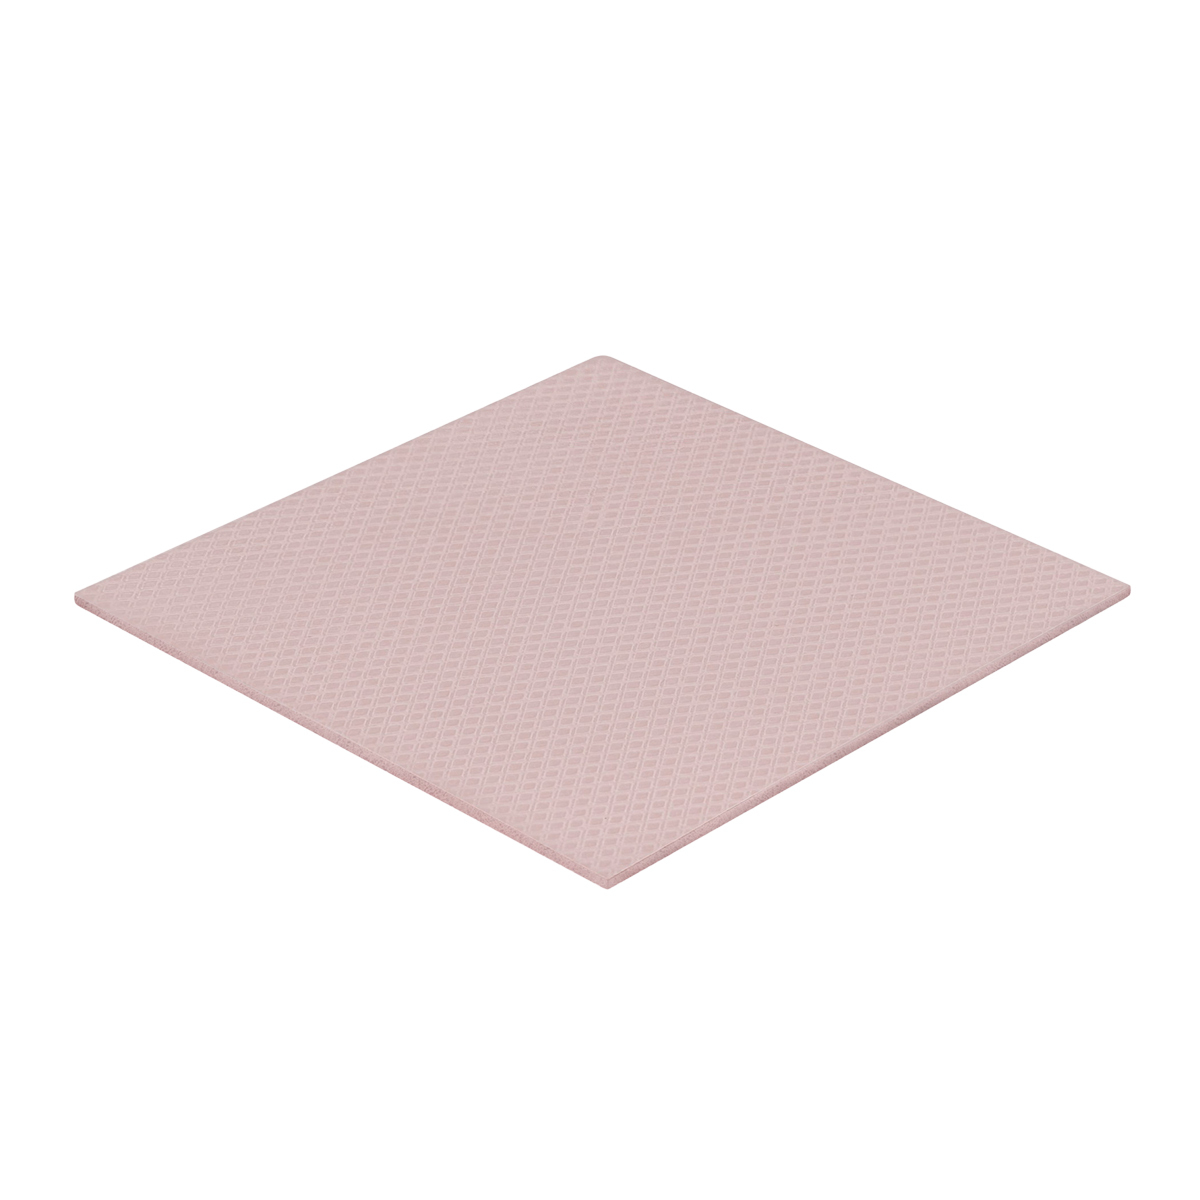 Thermal Grizzly Minus Pad 8 (100 x 100 x 1,0 mm) | Wärmeleitpad von THERMAL GRIZZLY